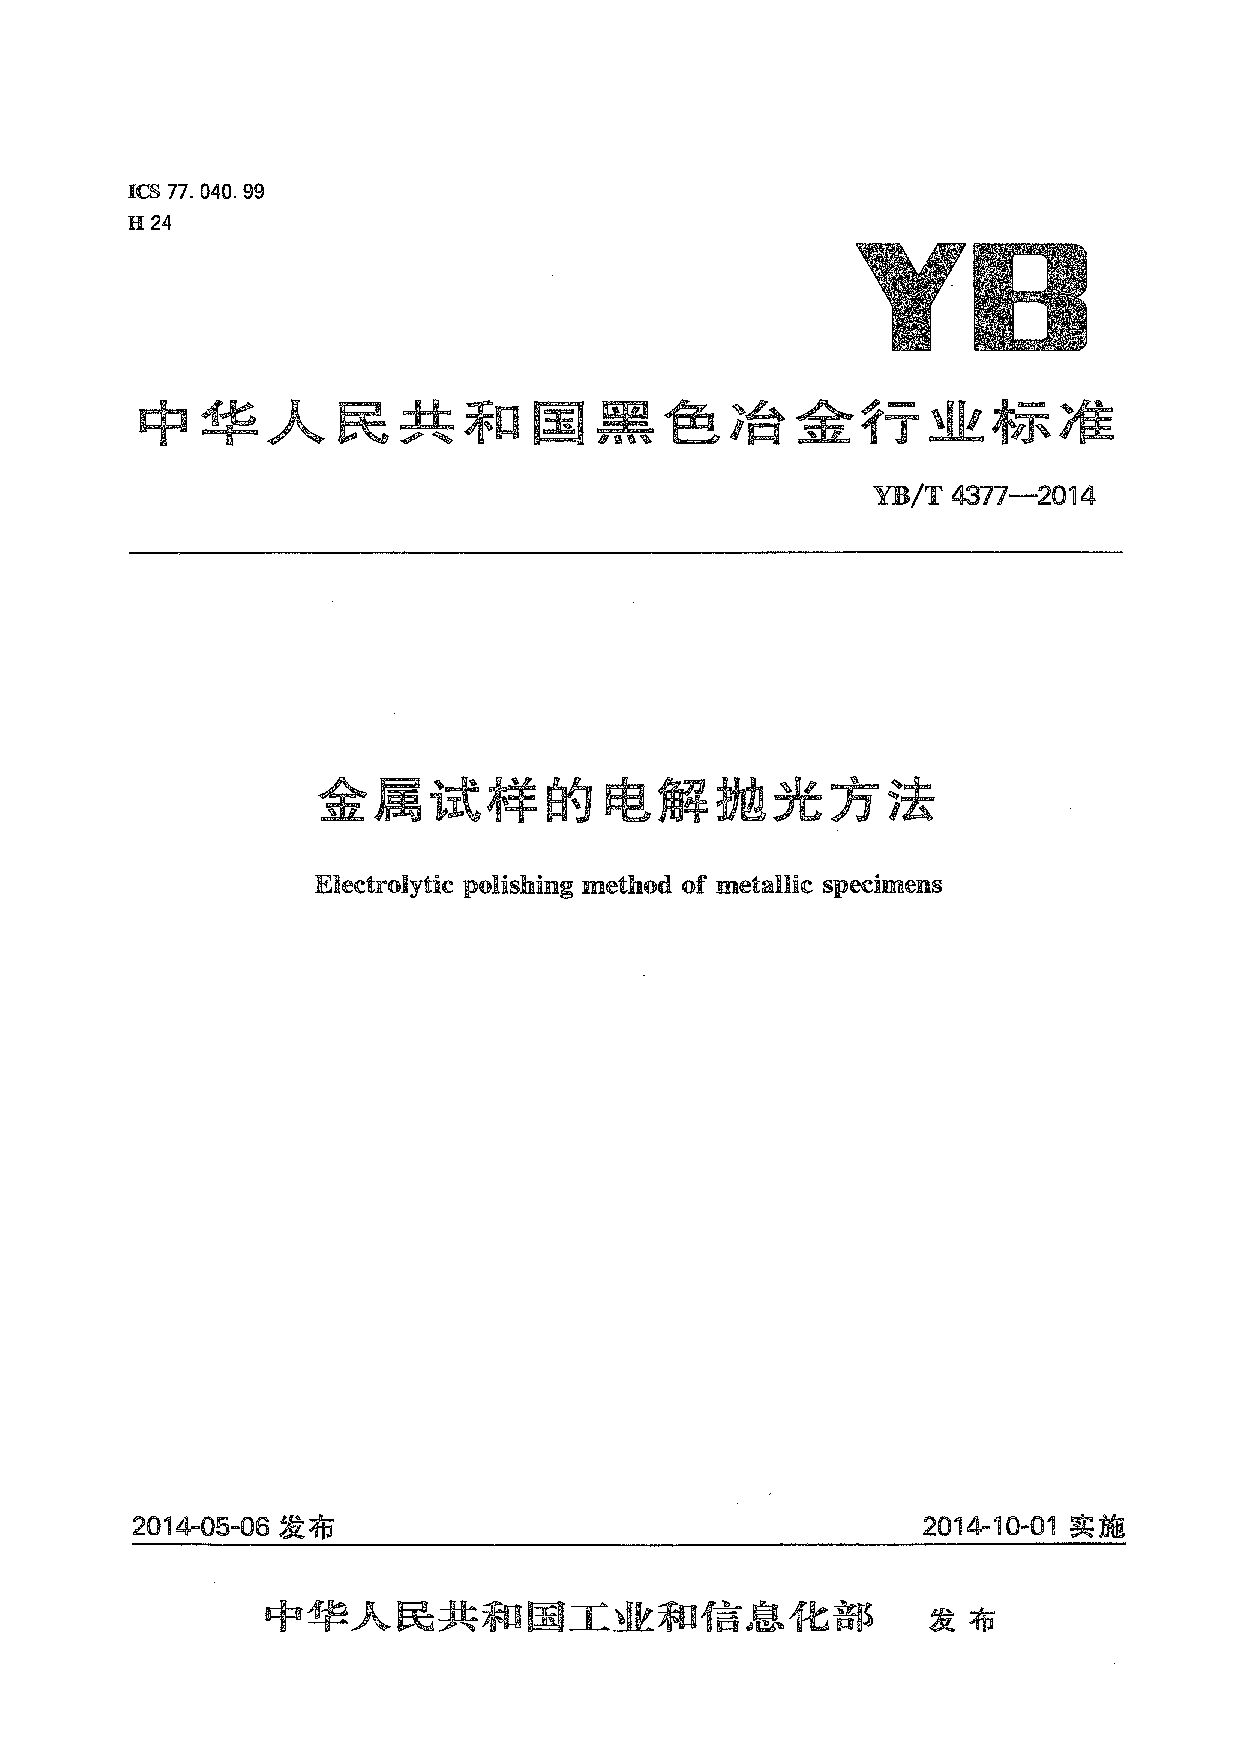 YB/T 4377-2014